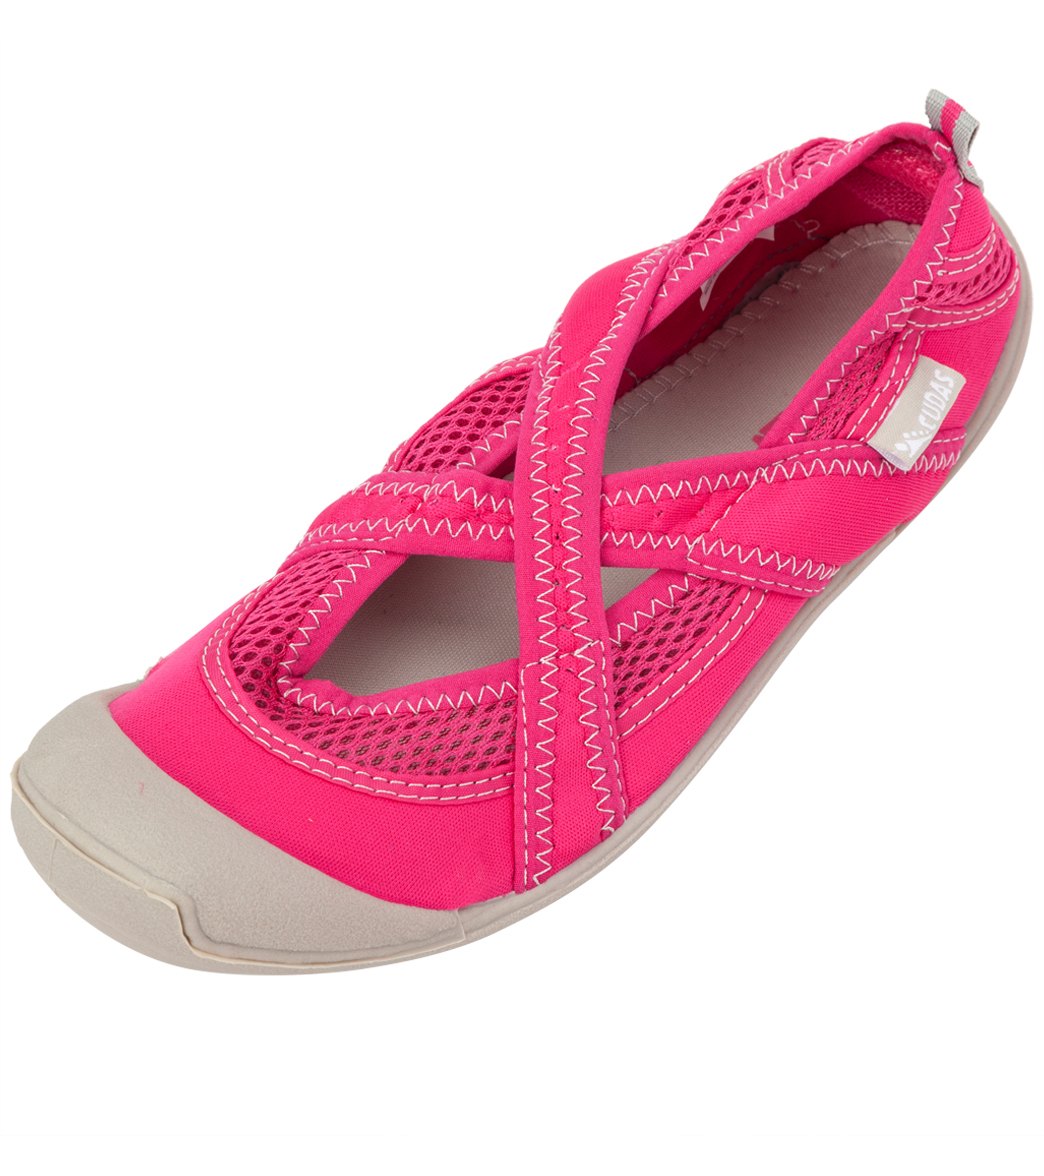 Cudas Women's Shasta Water Shoes - Pink 10 - Swimoutlet.com